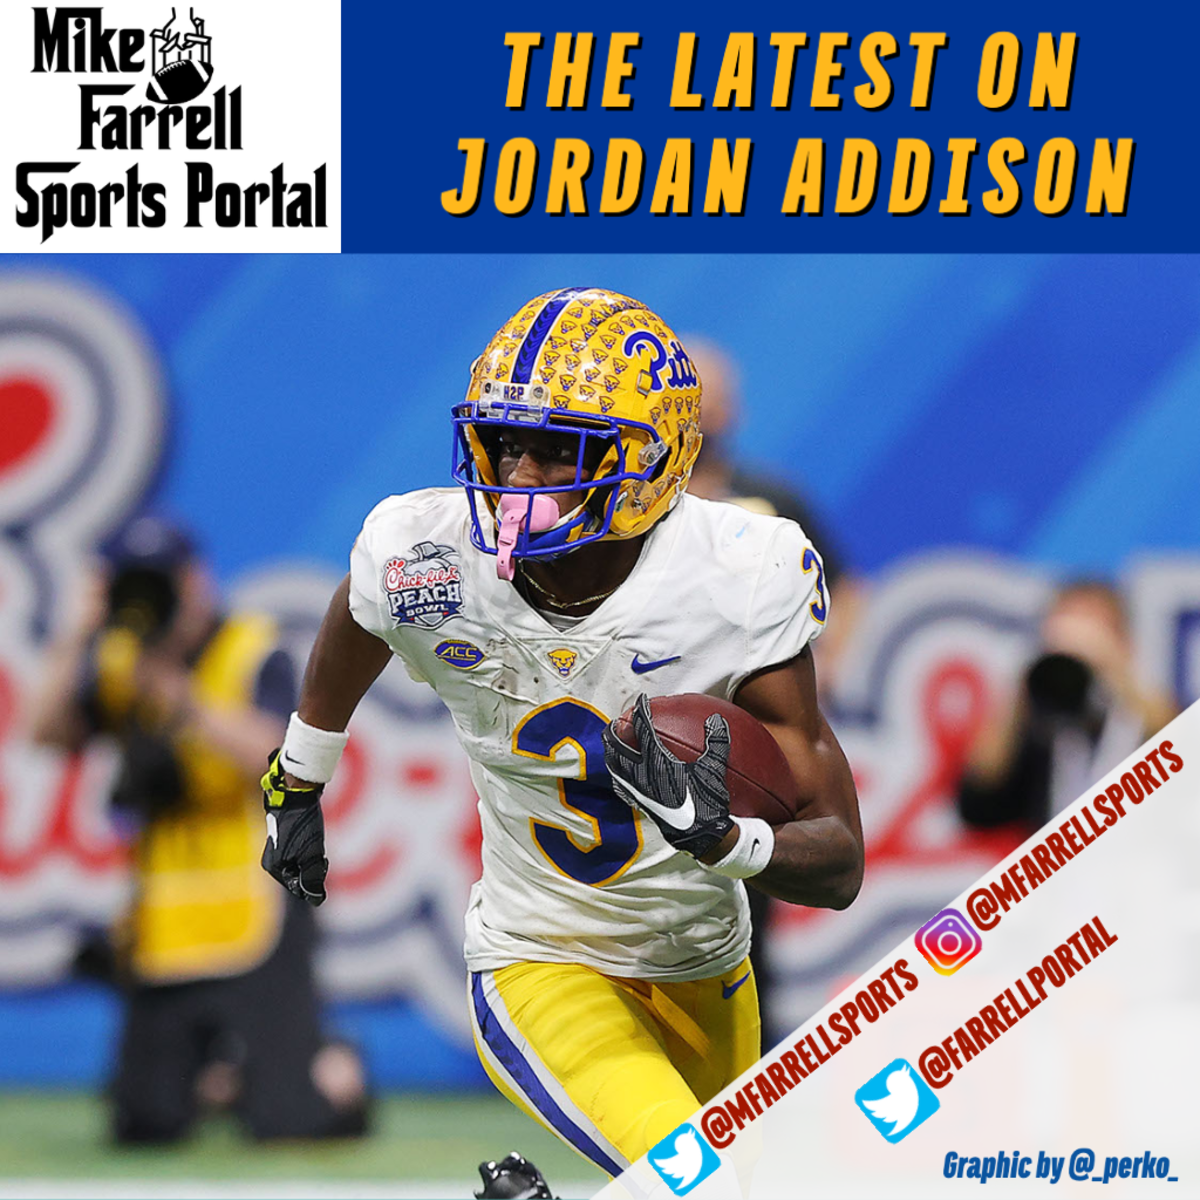 The Latest on Jordan Addison